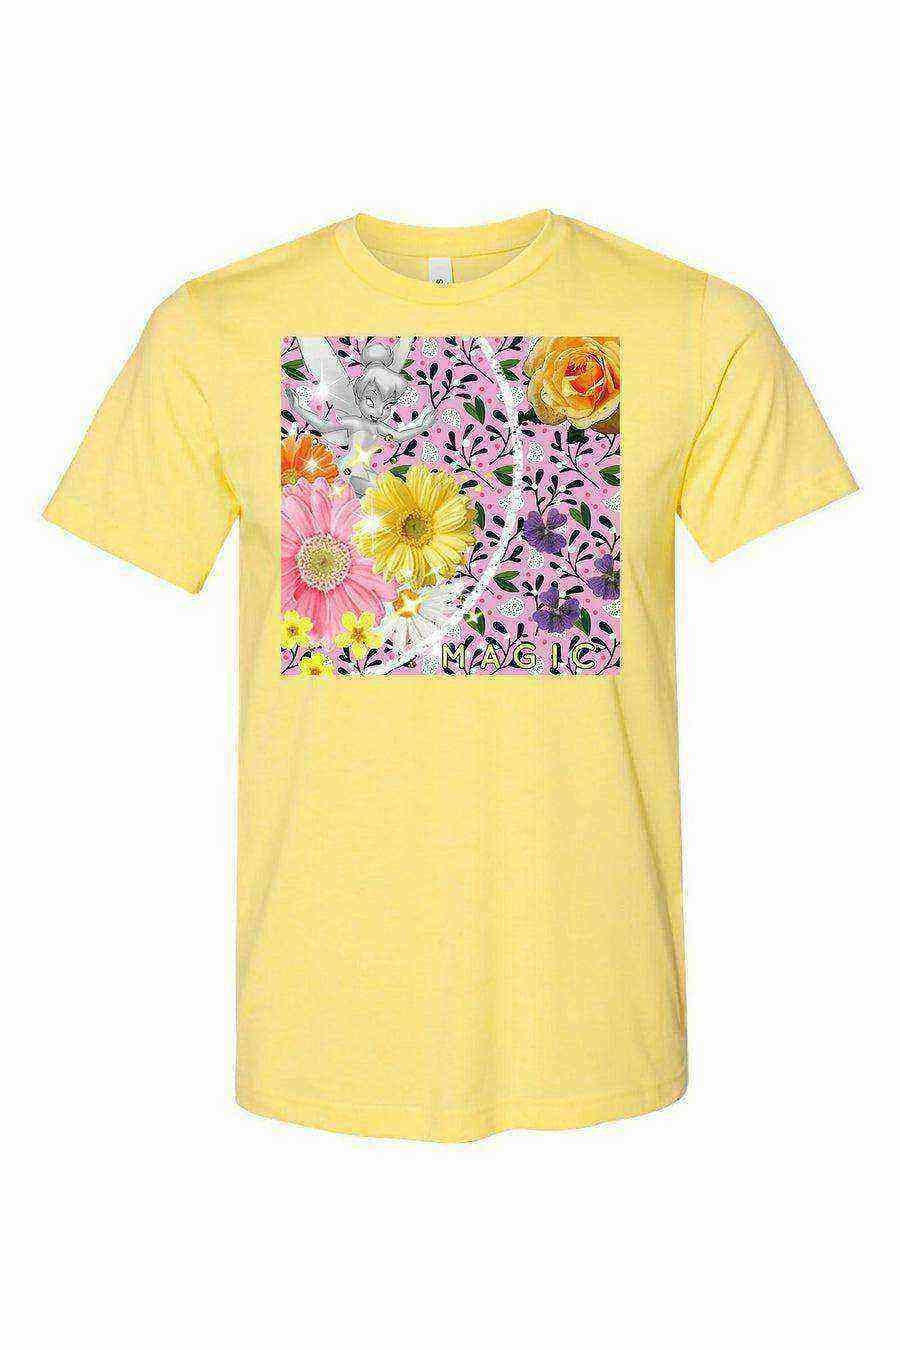 Youth | Tinker Bell Floral Shirt | Peter Pan Shirt - Dylan's Tees